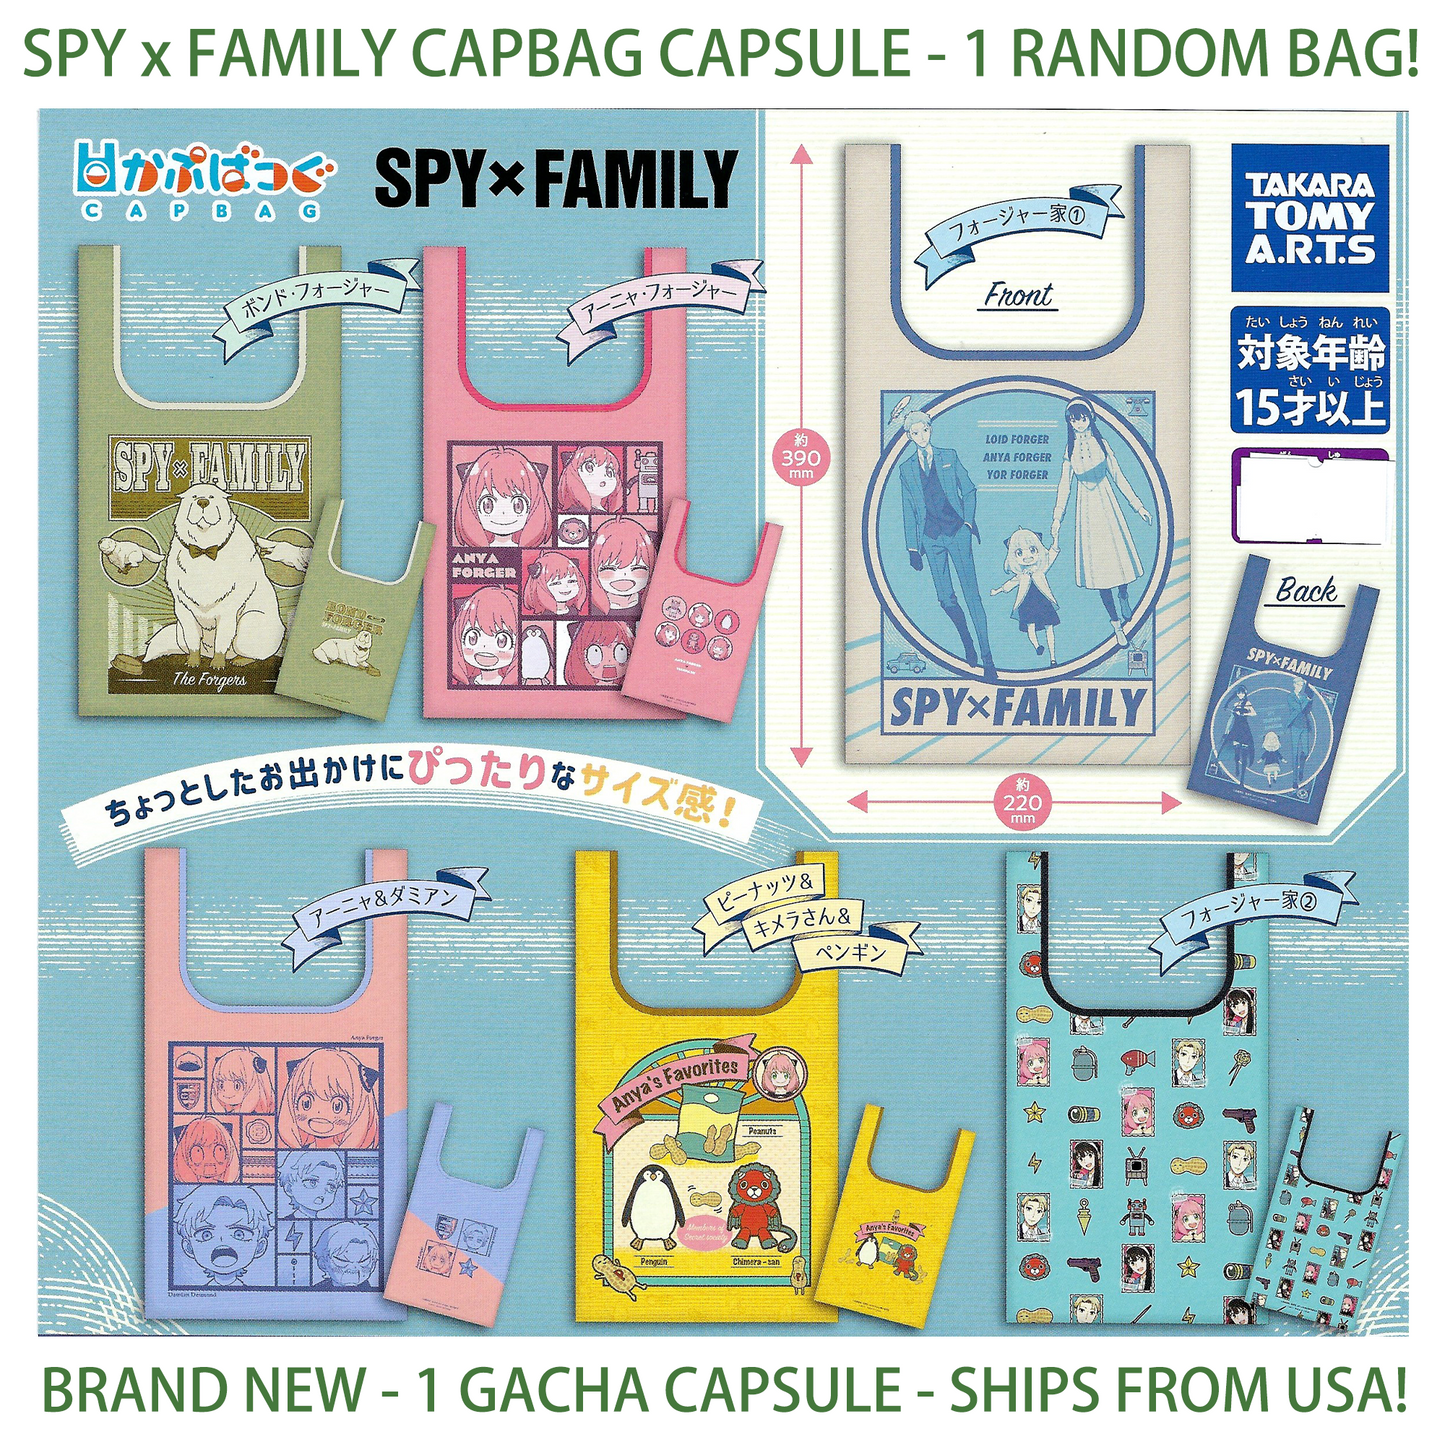 SPY x FAMILY CAPBAG - Gashapon Bag - TAKARA TOMY ARTS (BRAND NEW) 1 RANDOM BAG!